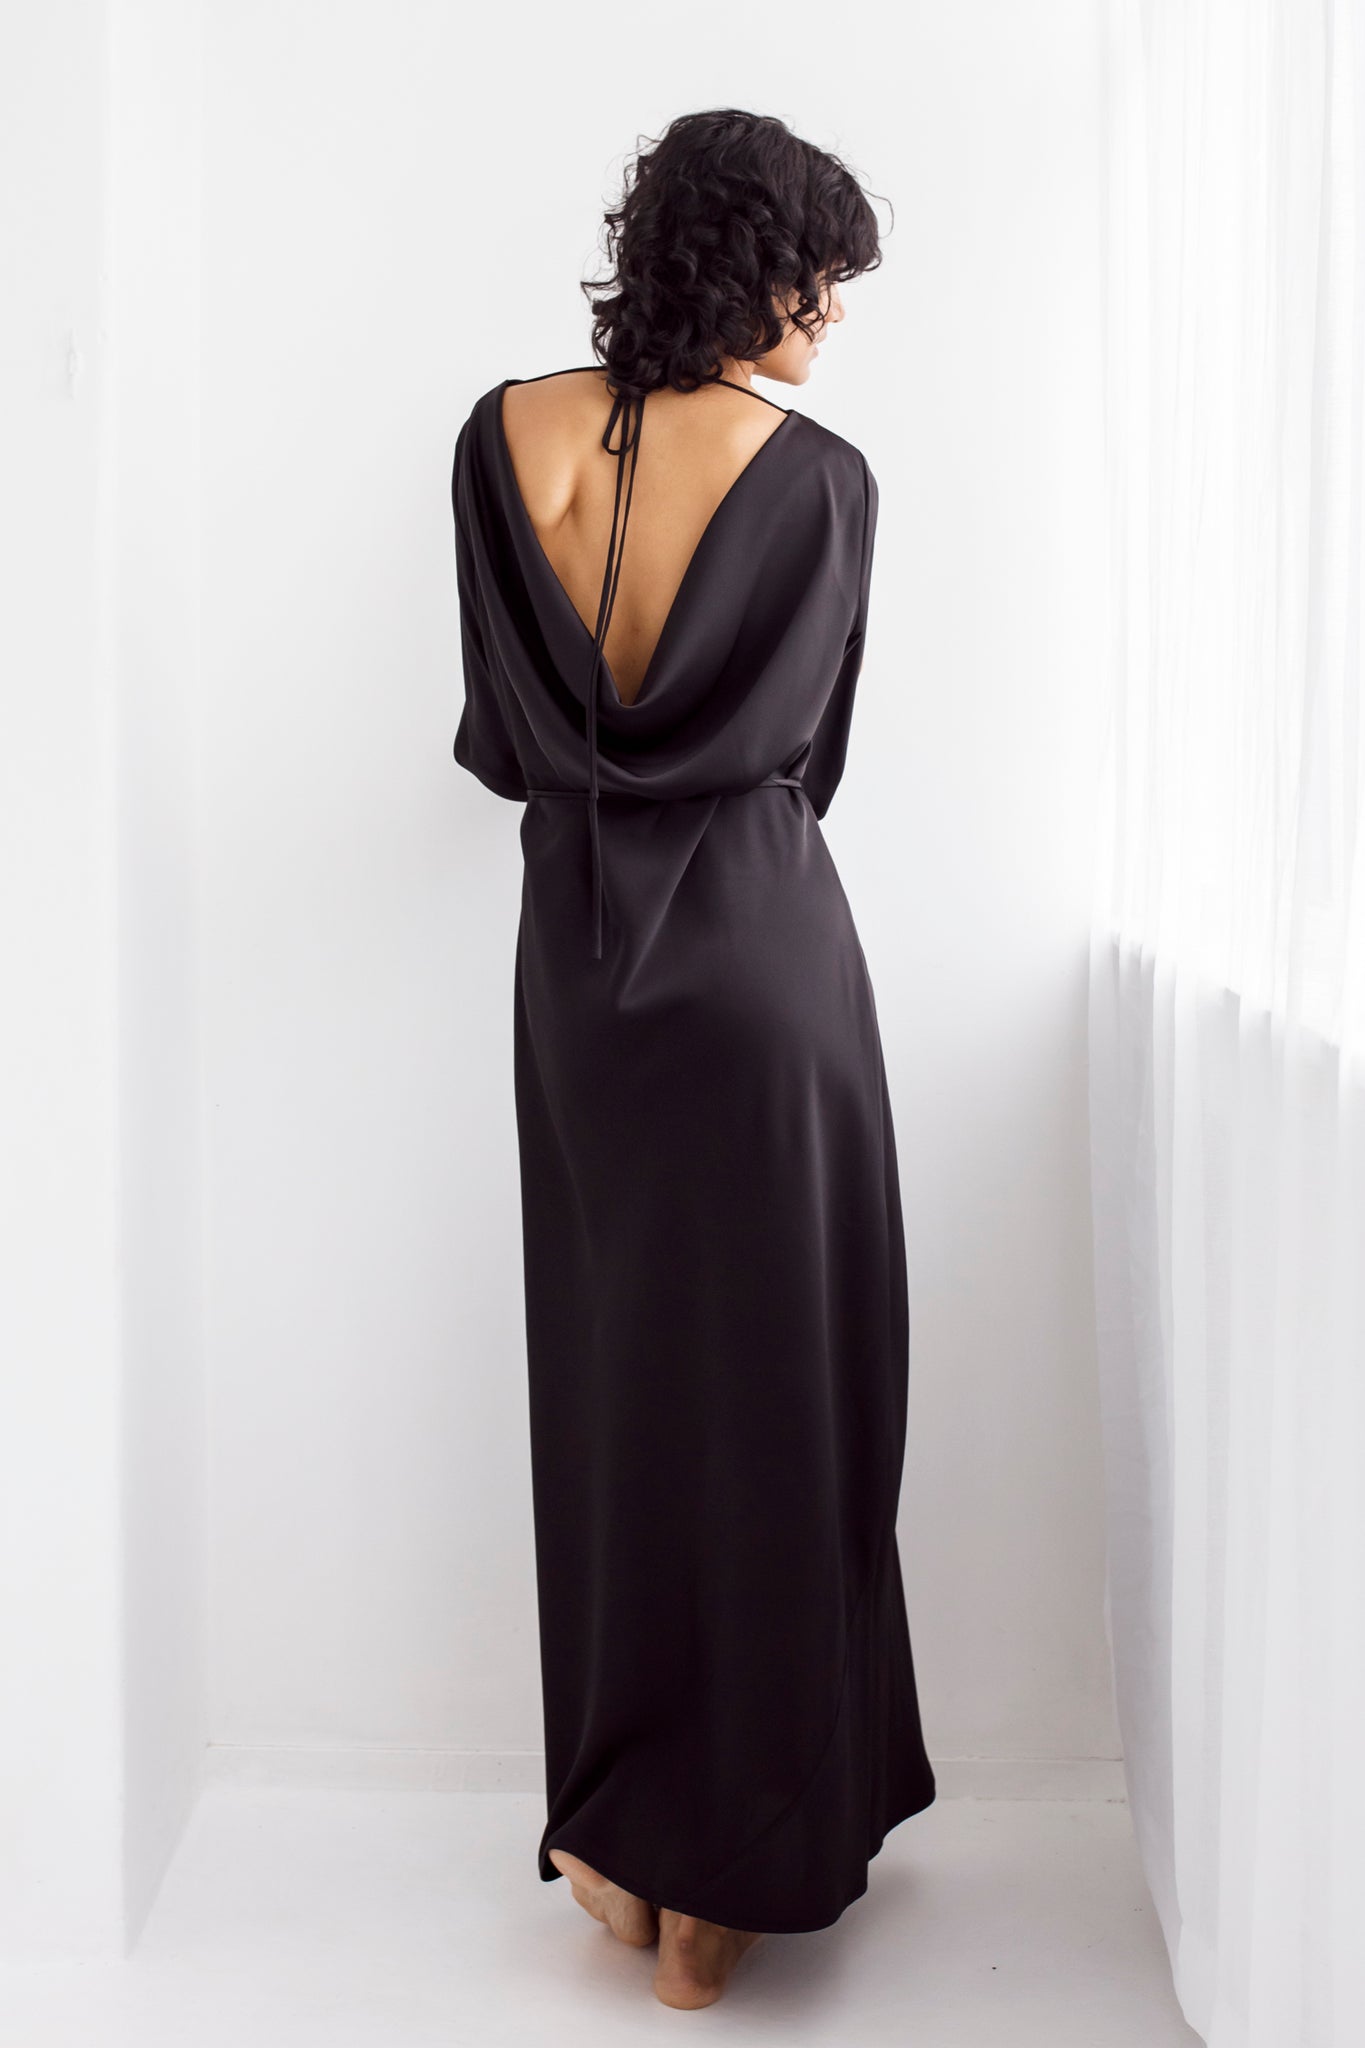 Florence Cowl Neck Dress - Black